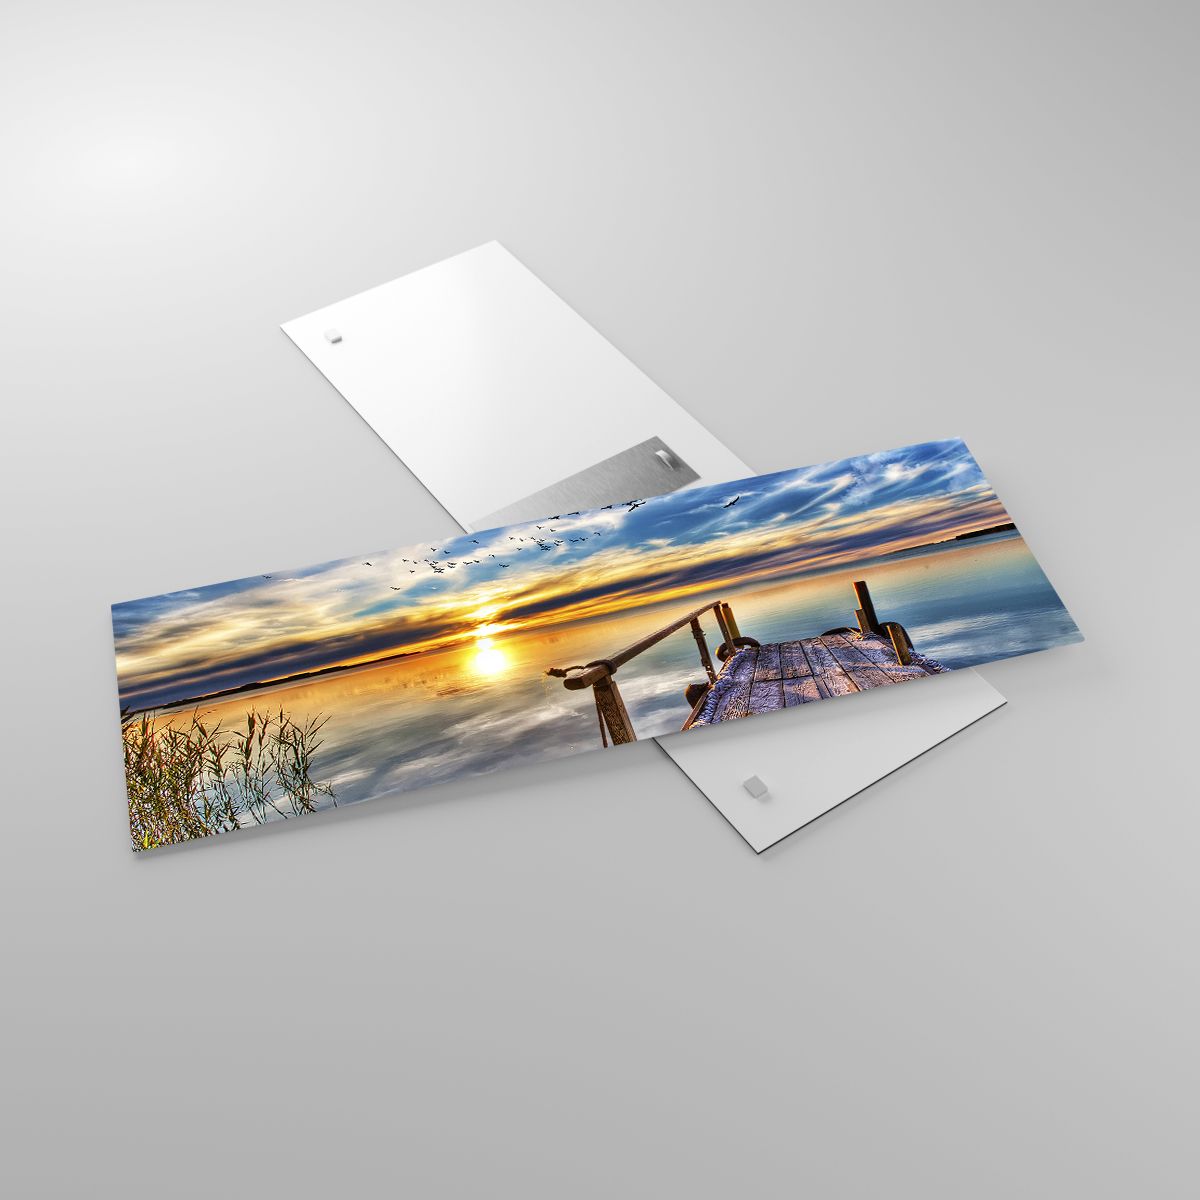 Glasbild Landschaft, Glasbild See, Glasbild Holzbrücke, Glasbild Der Sonnenuntergang, Glasbild Natur